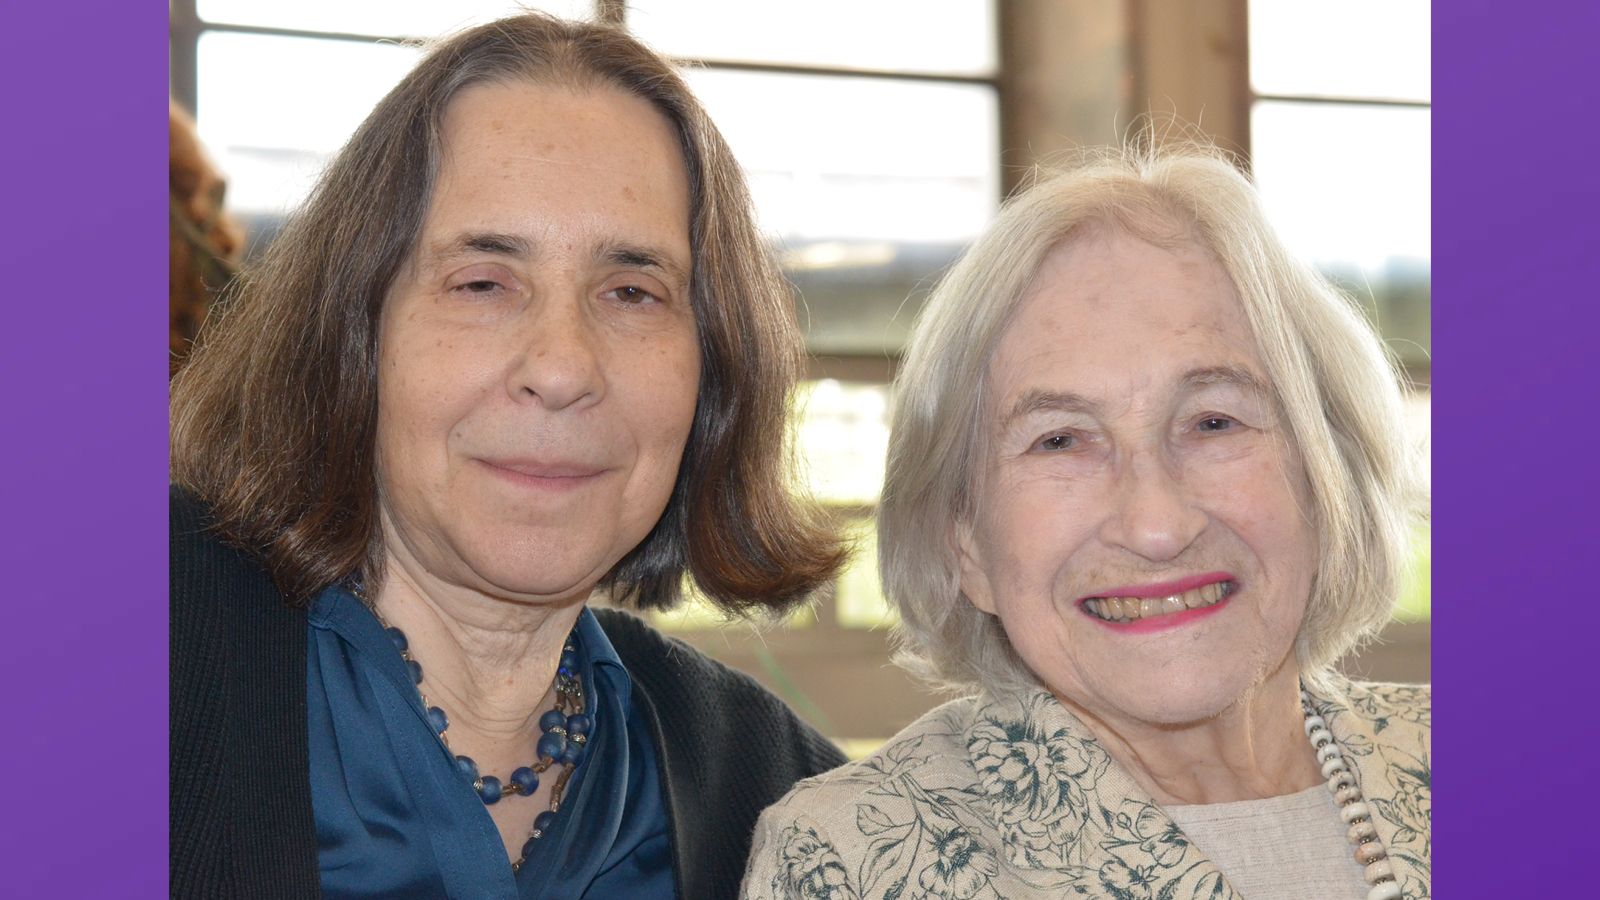 From left: Dean Jennifer Tuten and her mother, Carol Levine.